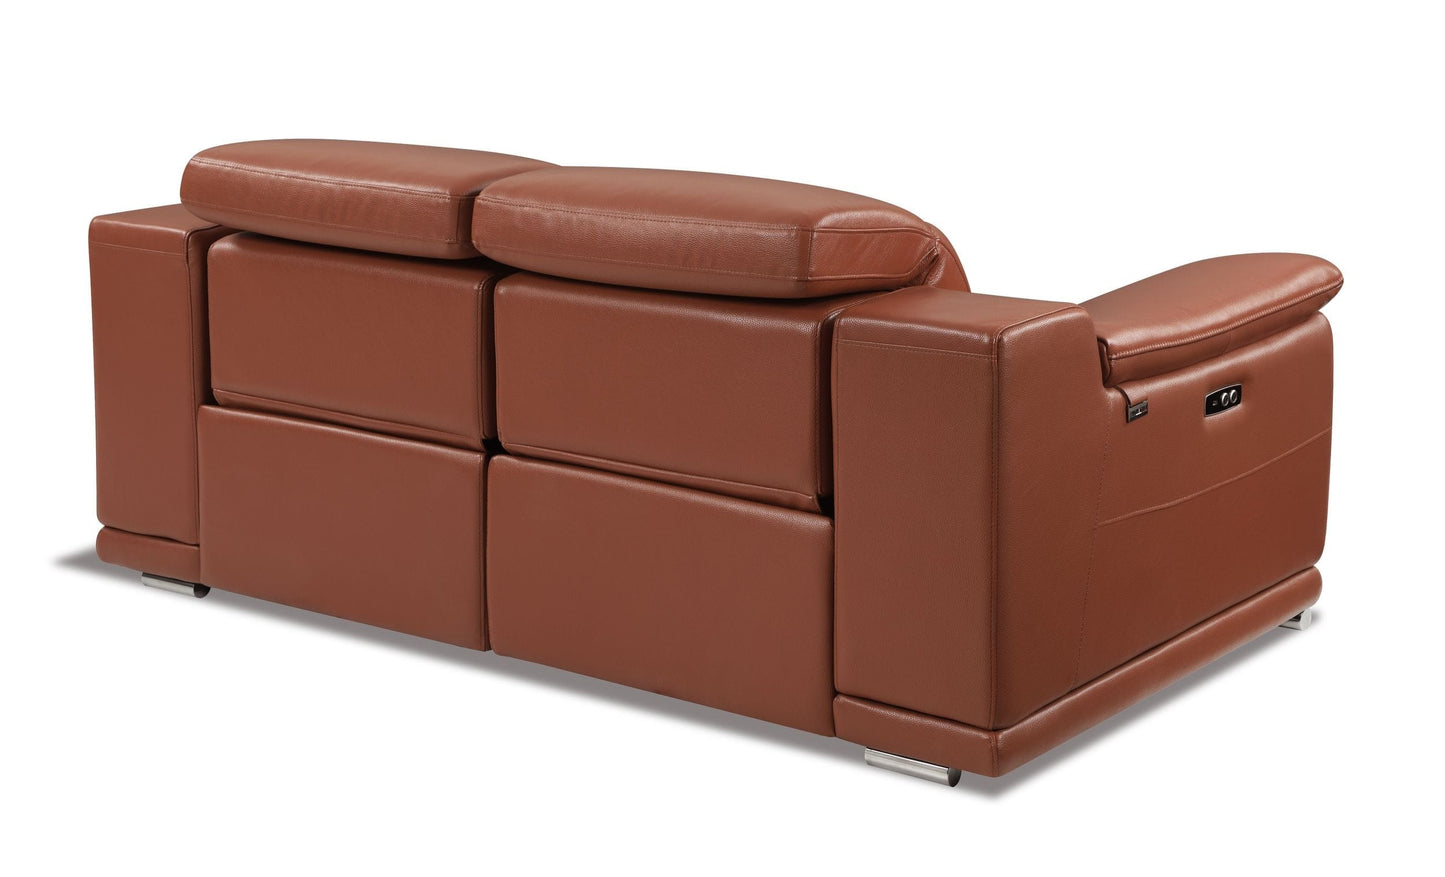 # Alanzo Italian Leather Power Reclining Sofa CAMEL